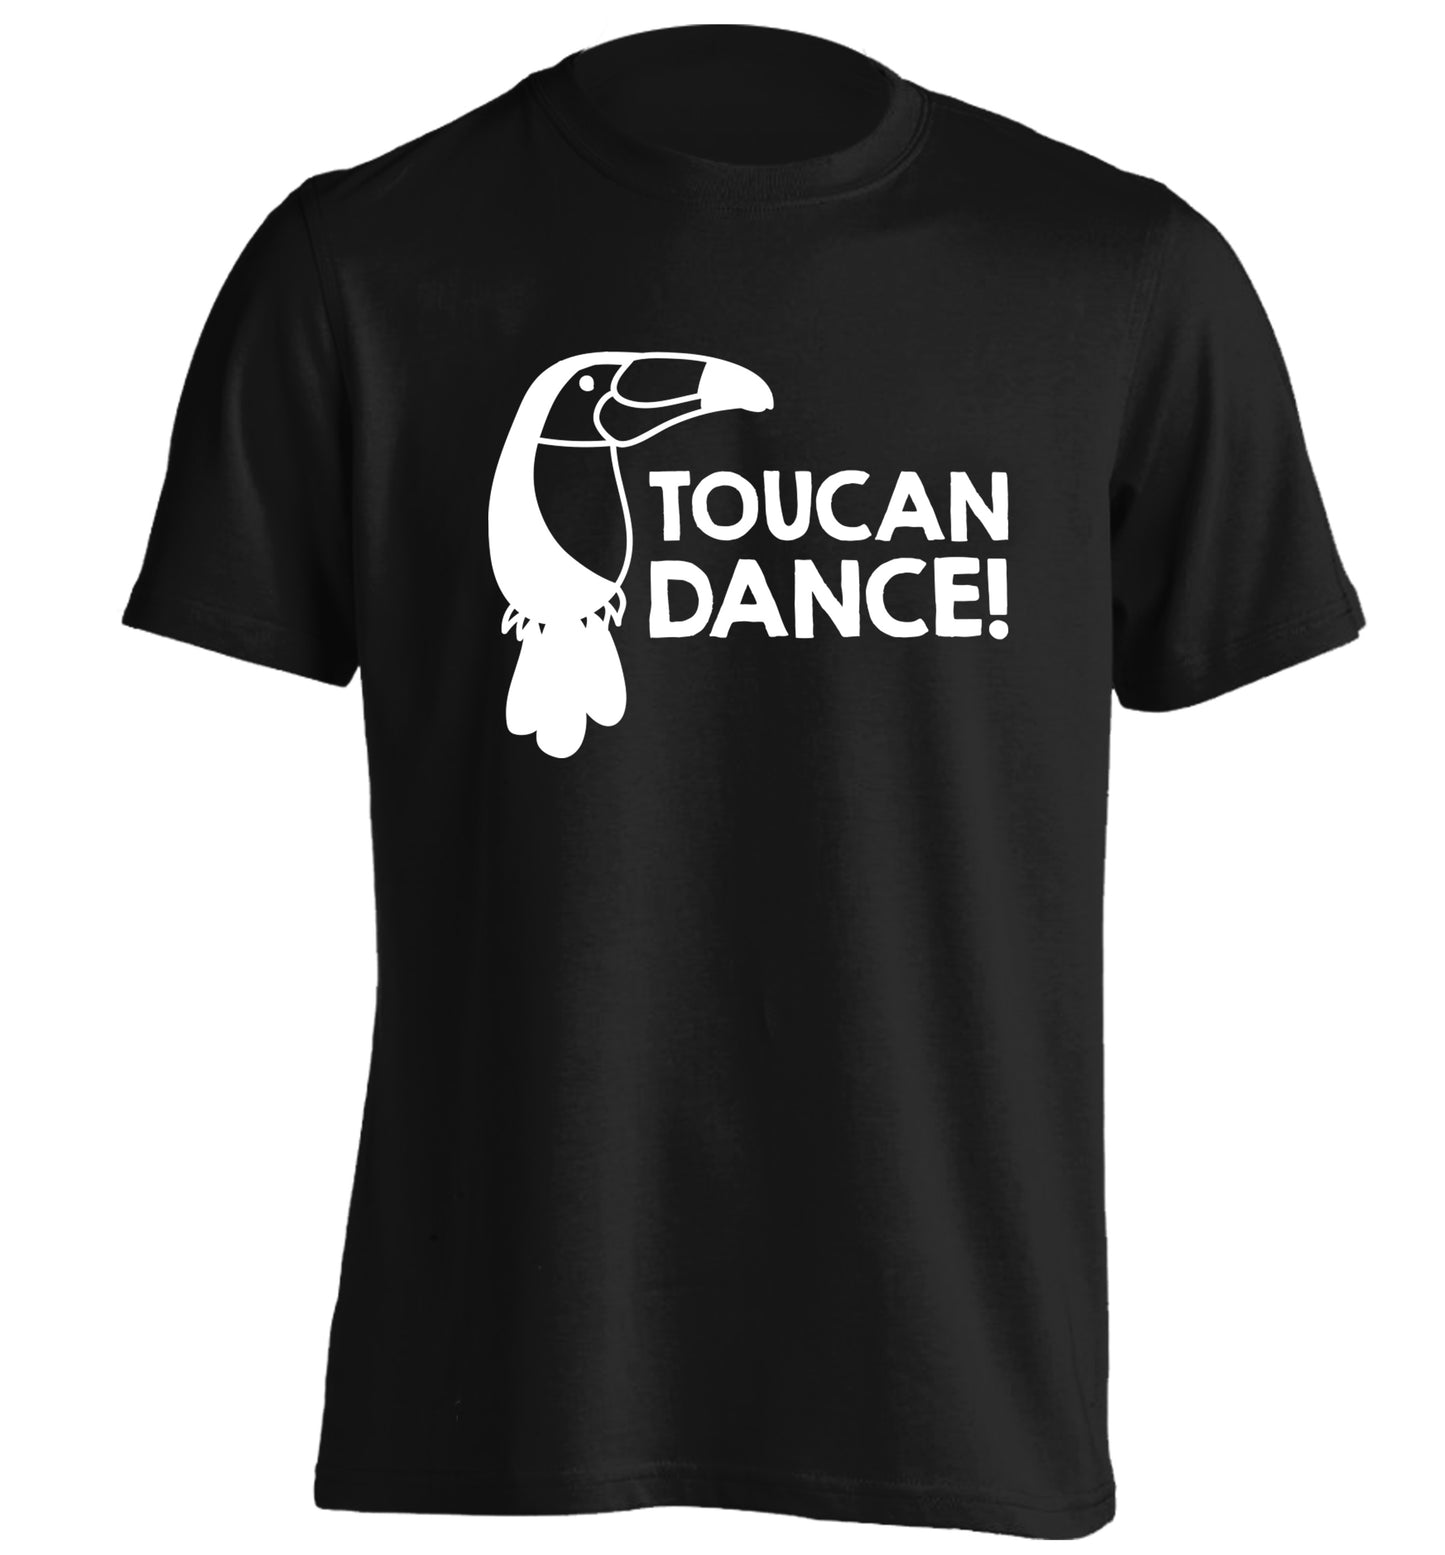 Toucan dance adults unisex black Tshirt 2XL